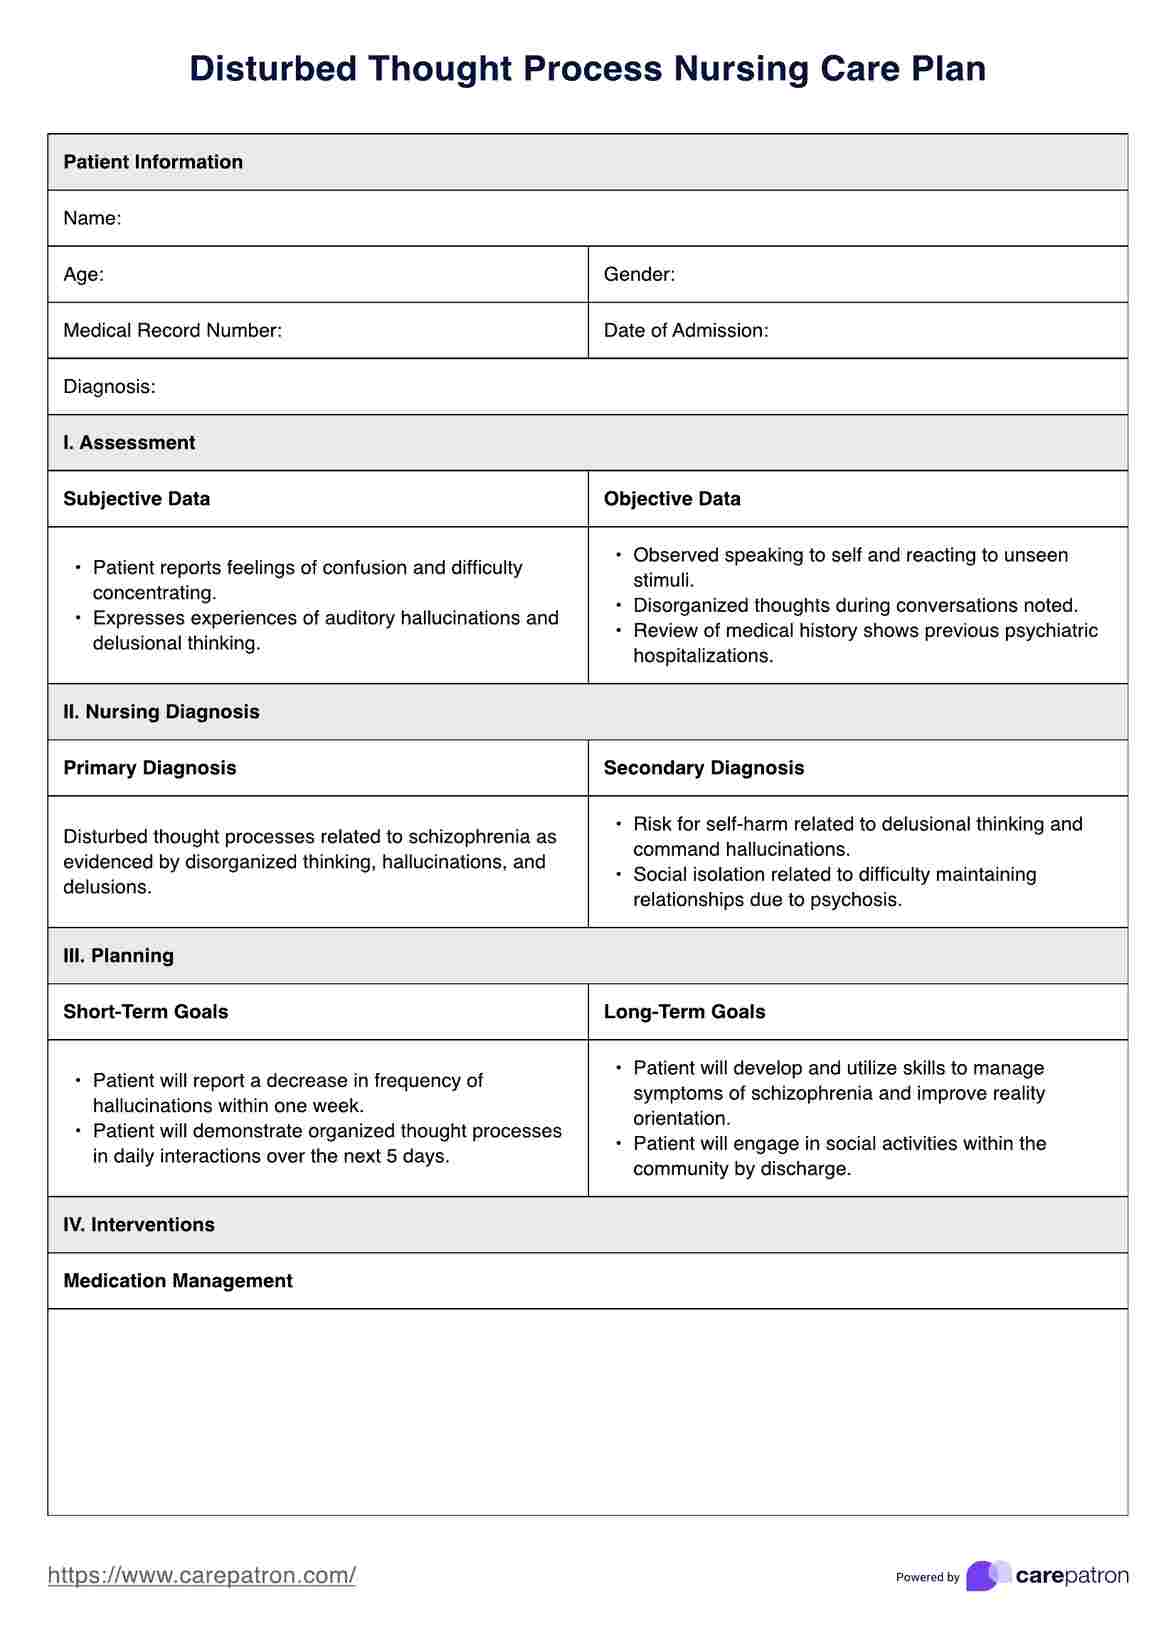 Disturbed Thought Process Nursing Care Plan PDF Example